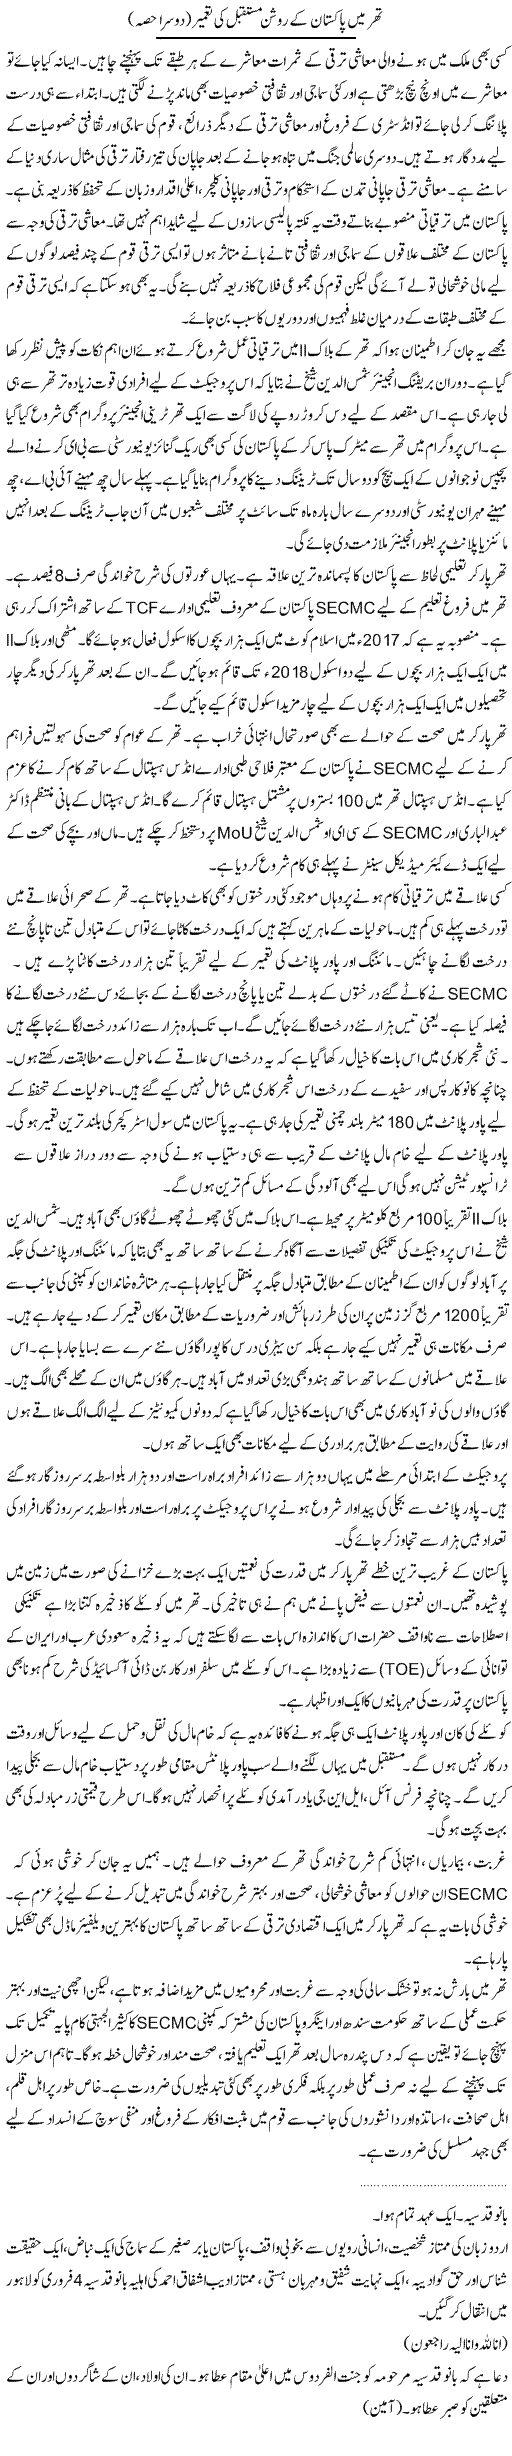 Thar Mein Pakistan Ke Roshan Mustaqbil Ki Taameer (2) | Dr. Waqar Yousuf Azeemi | Daily Urdu Columns